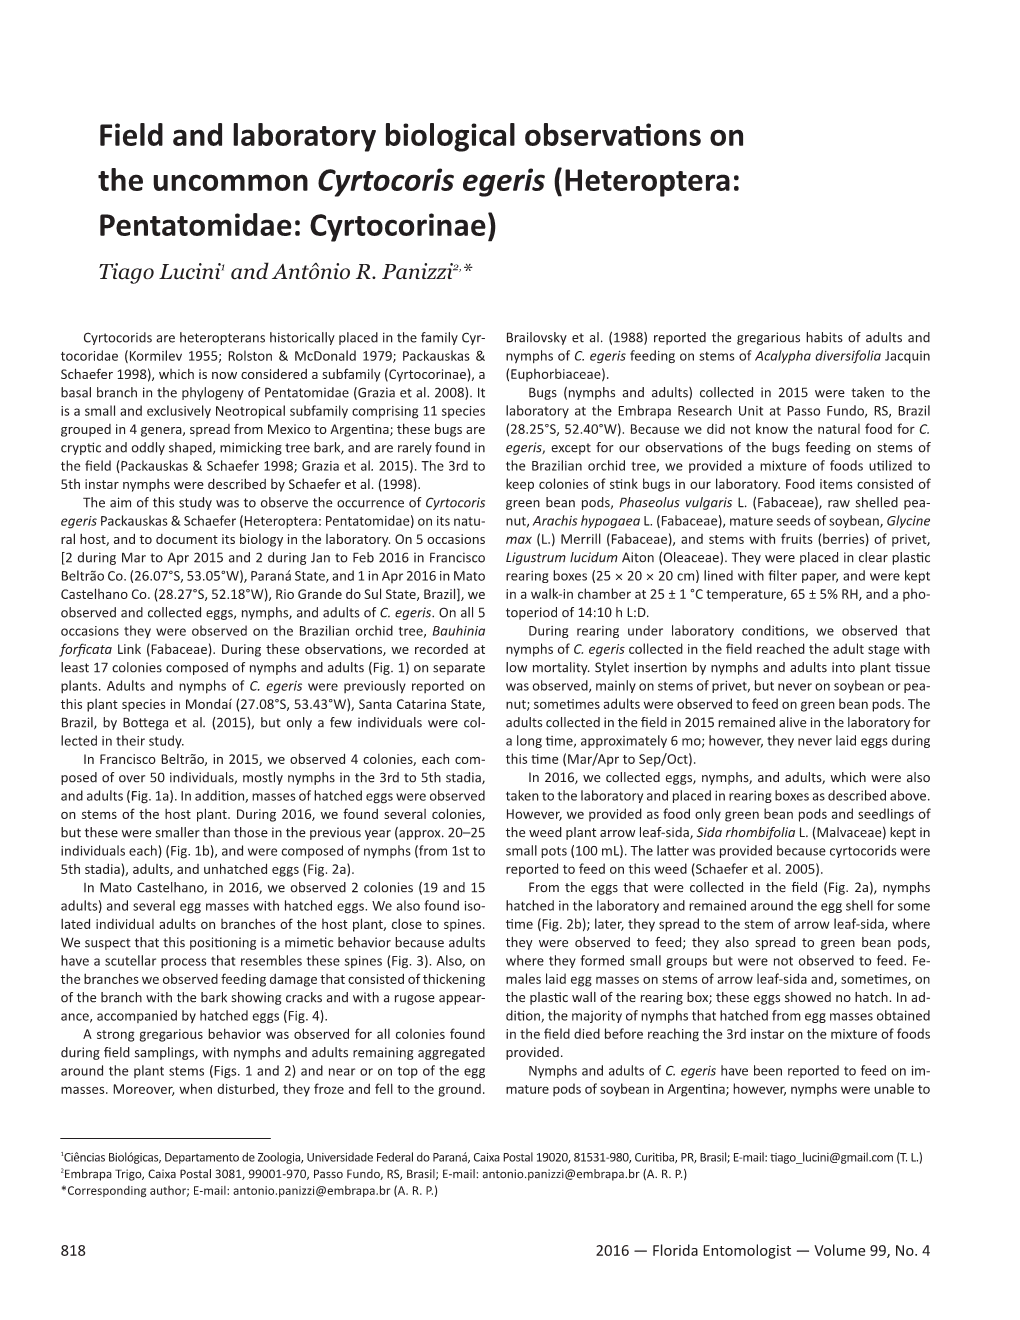 Field and Laboratory Biological Observations on the Uncommon Cyrtocoris Egeris (Heteroptera: Pentatomidae: Cyrtocorinae) Tiago Lucini1 and Antônio R